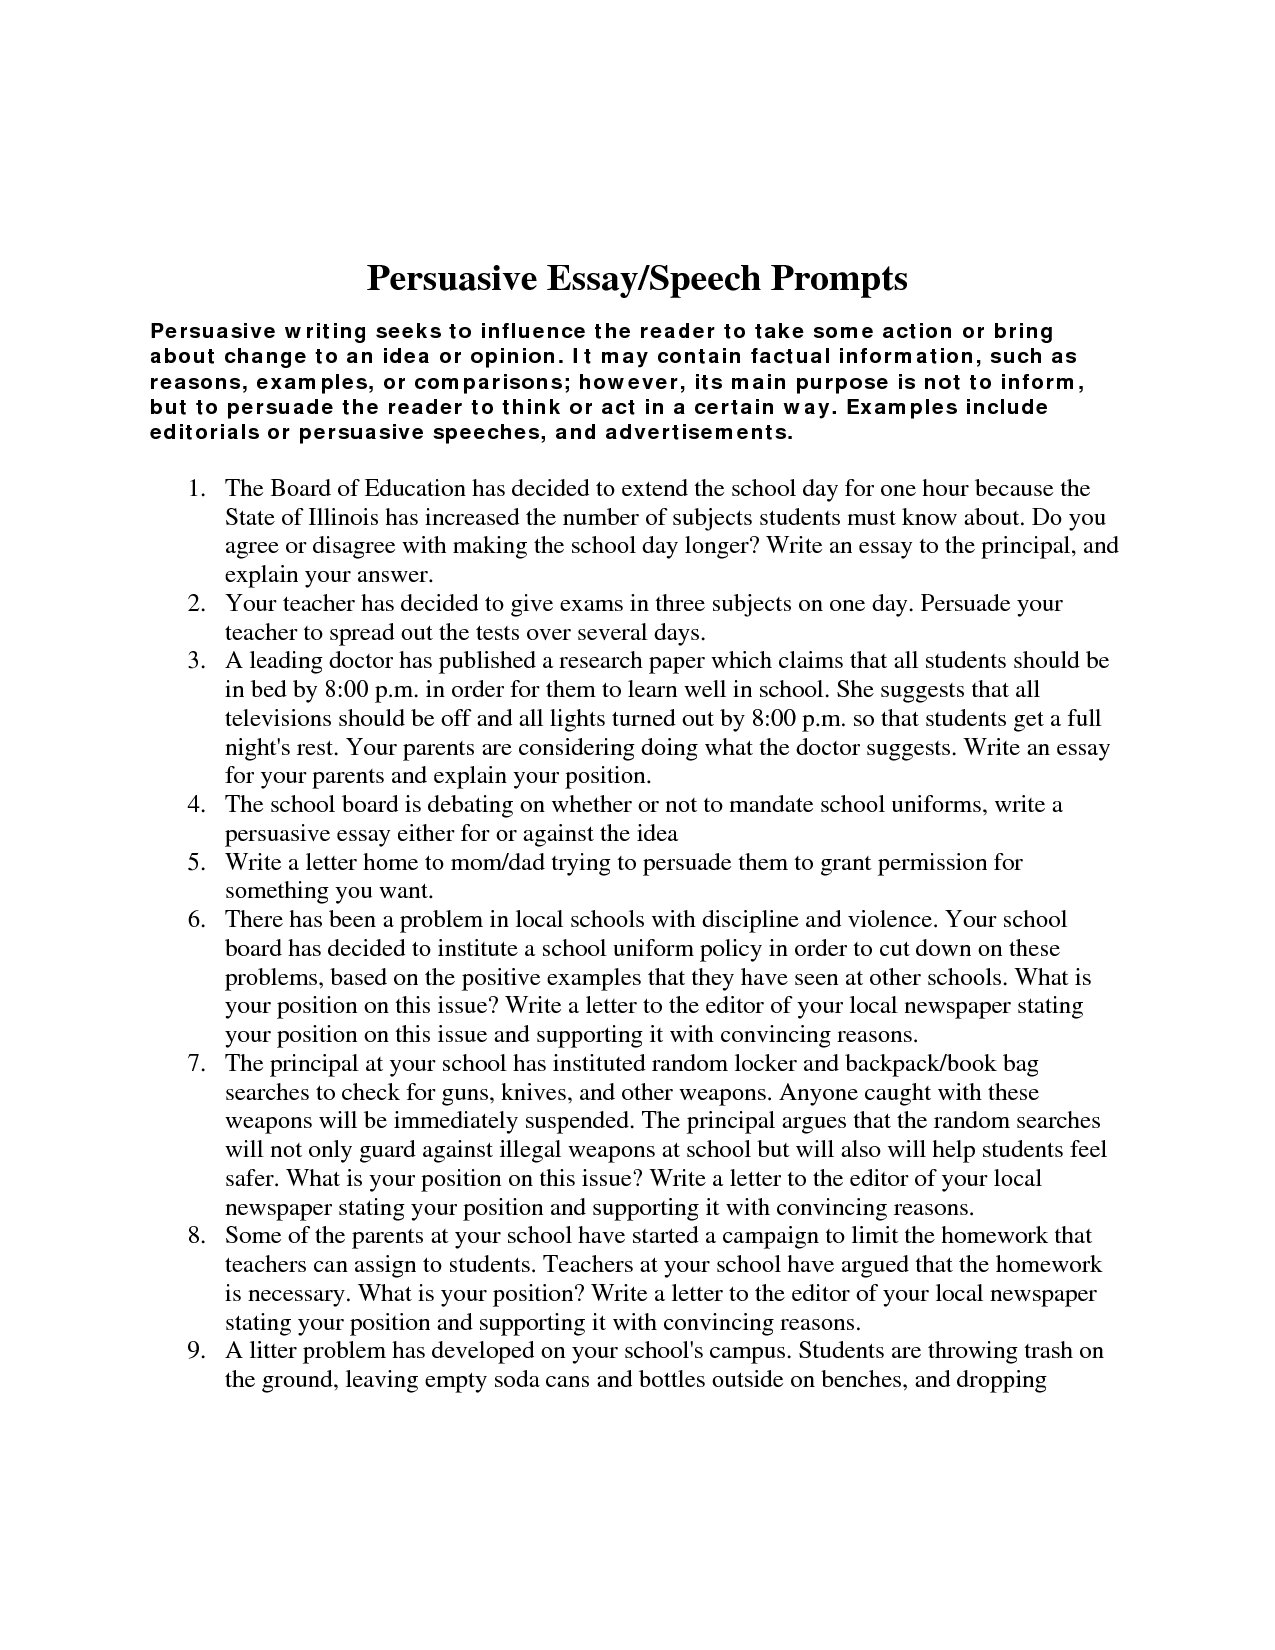 10 Fabulous Persuasive Speech Ideas For College Students good ideas for persuasive speeches topic ideas for persuasive essays 2022